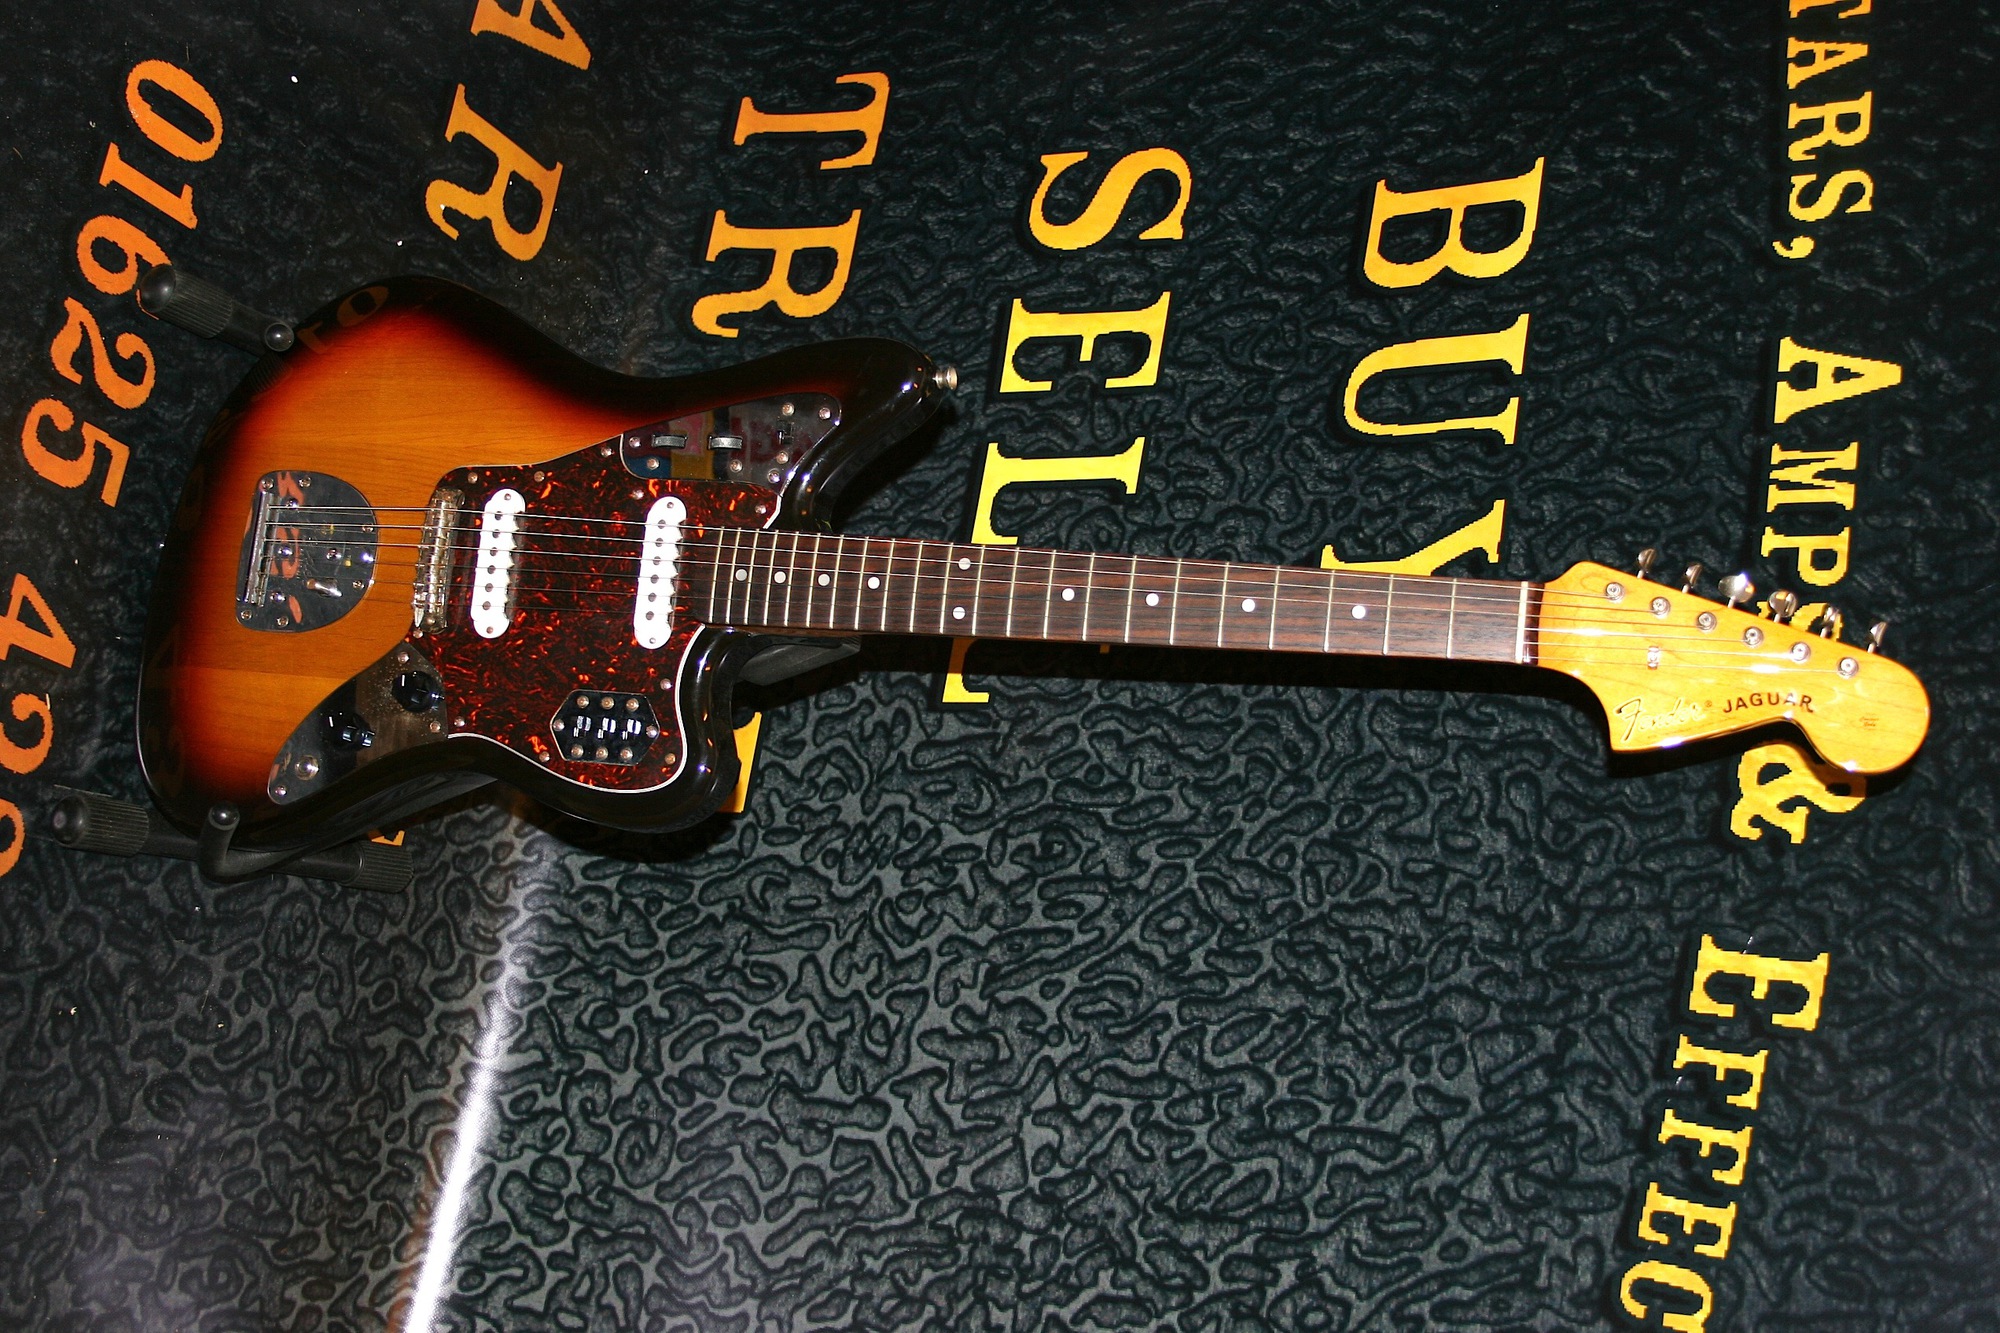 Fender Jaguar made in japan**SOLD - Amp Guitars, Macclesfield